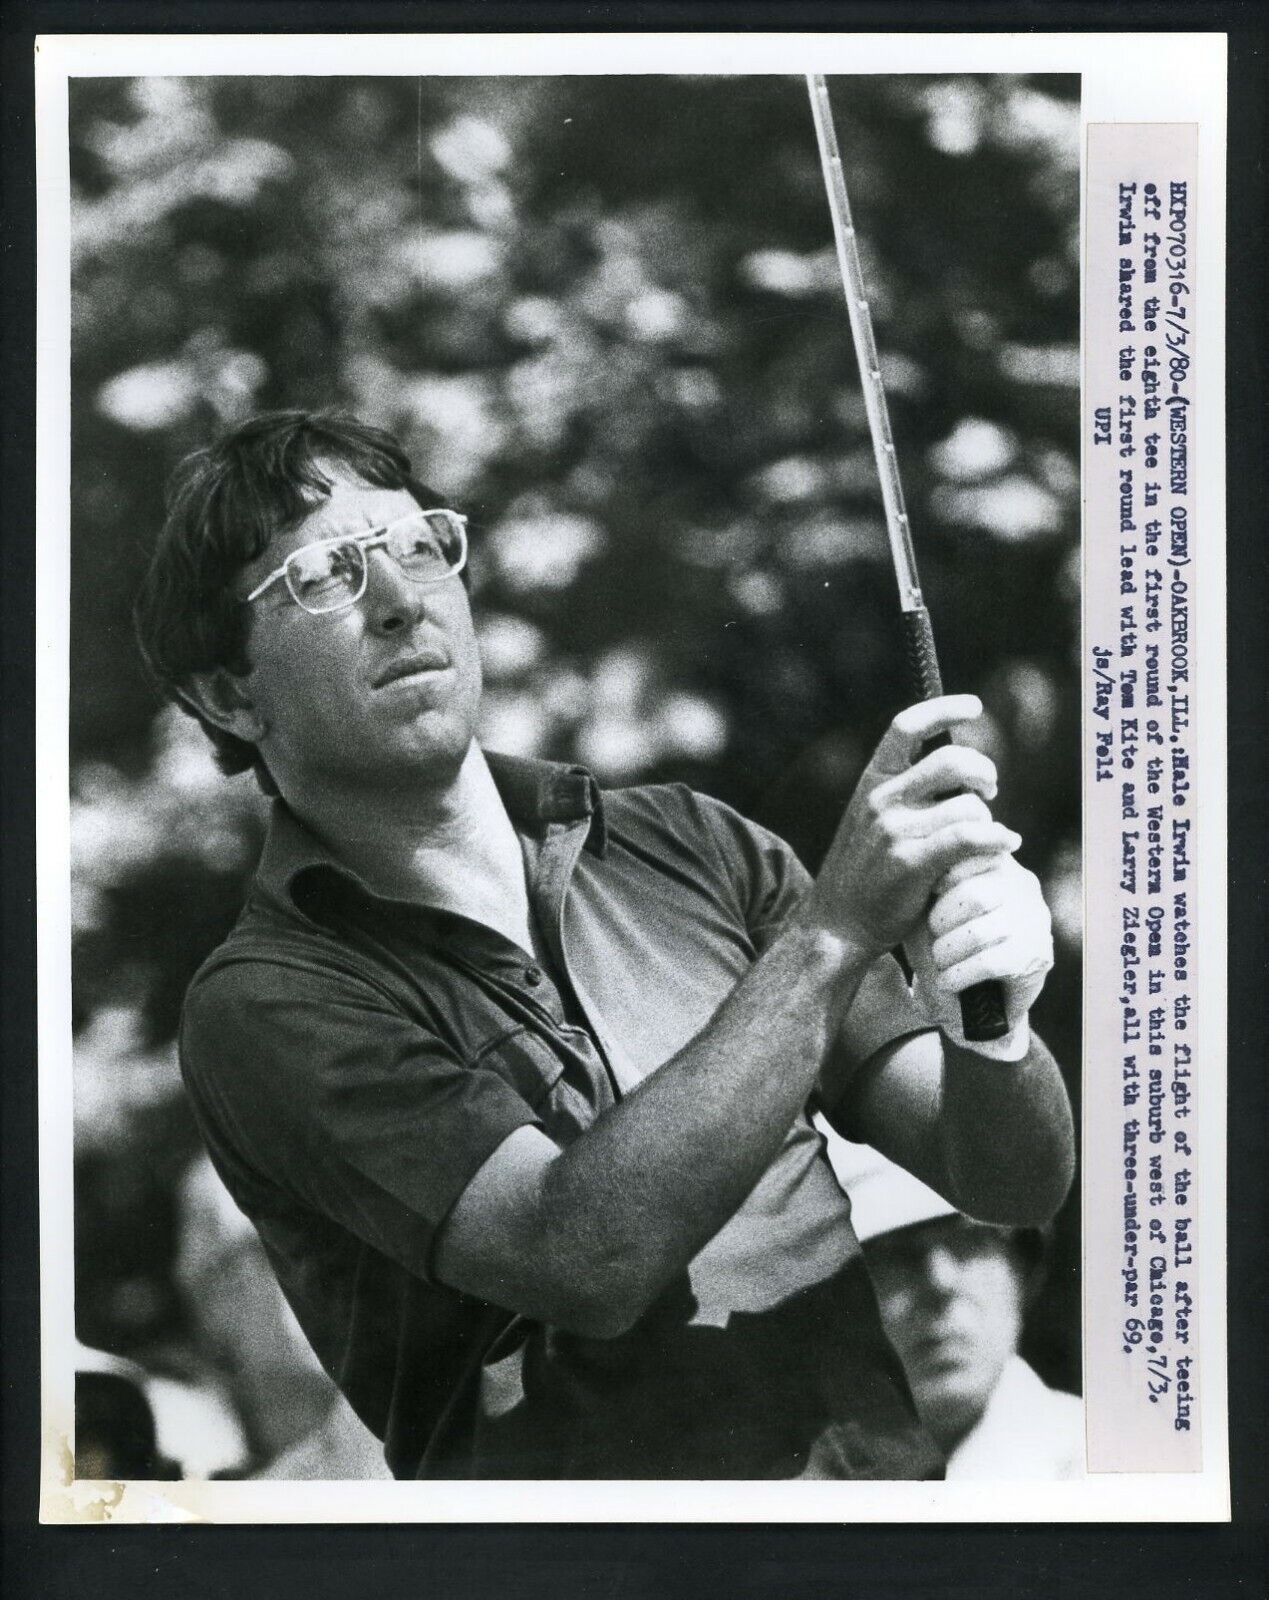 Hale Irwin 1980 Western Open Golf Press Photo Poster painting Butler National Golf Club tee shot